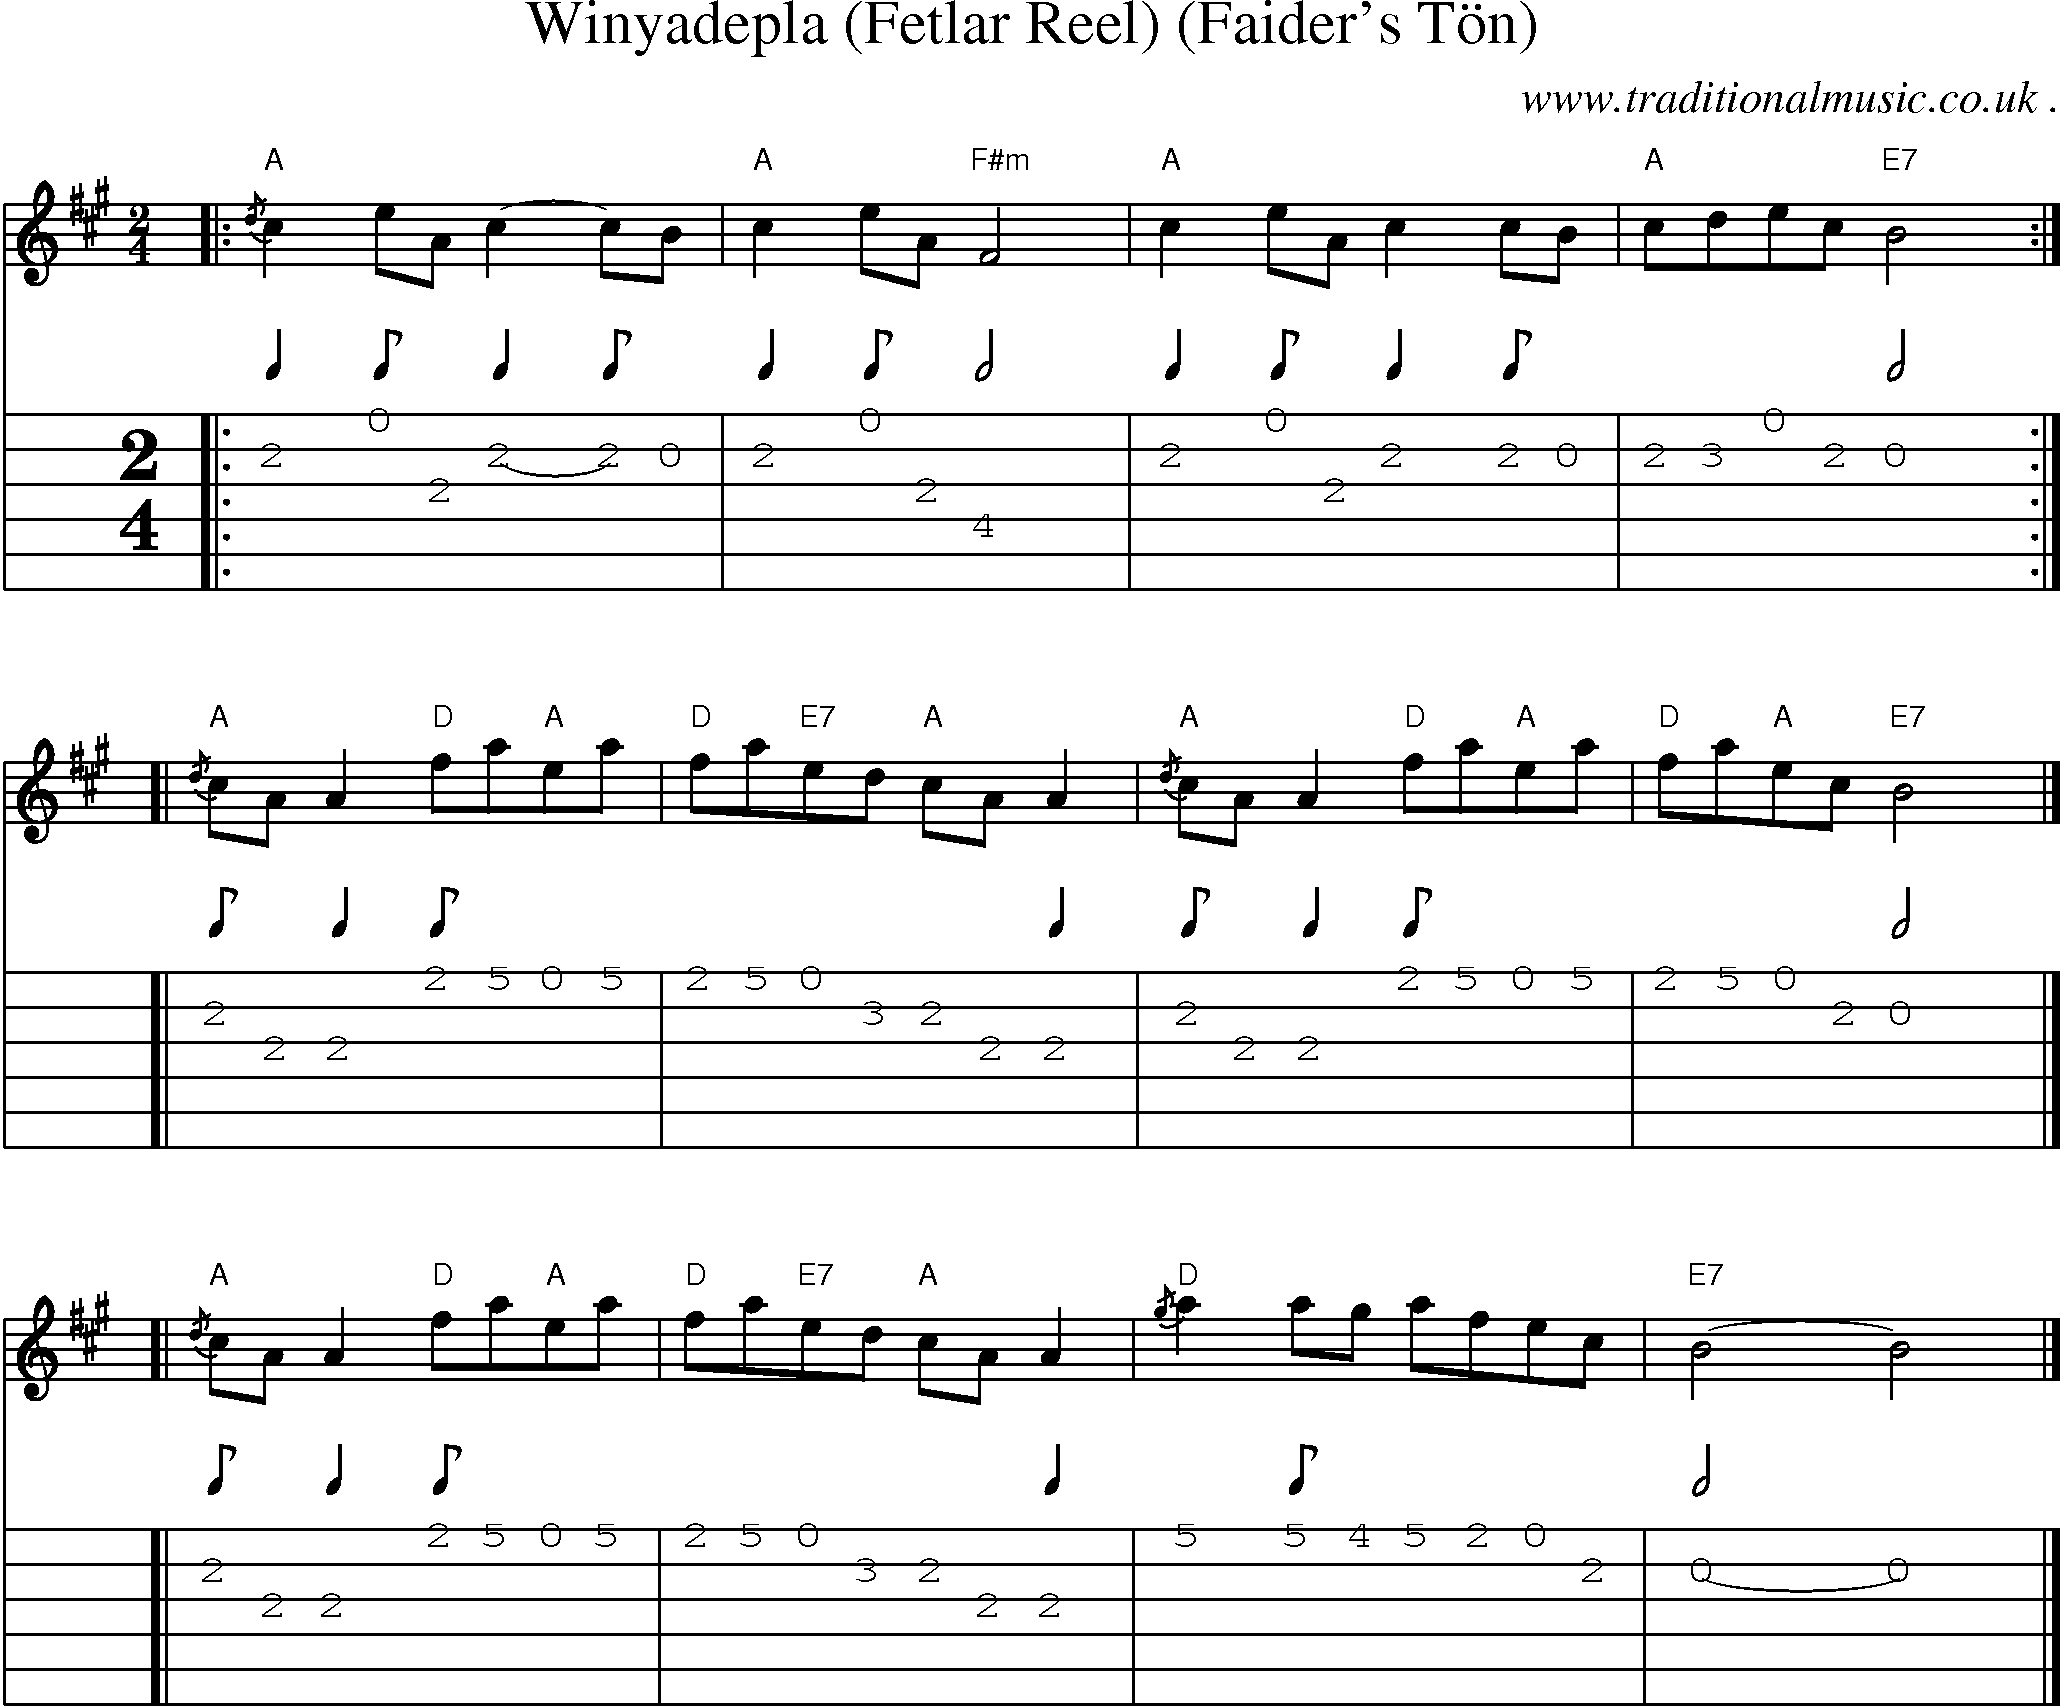 Sheet-music  score, Chords and Guitar Tabs for Winyadepla Fetlar Reel Faiders Ton